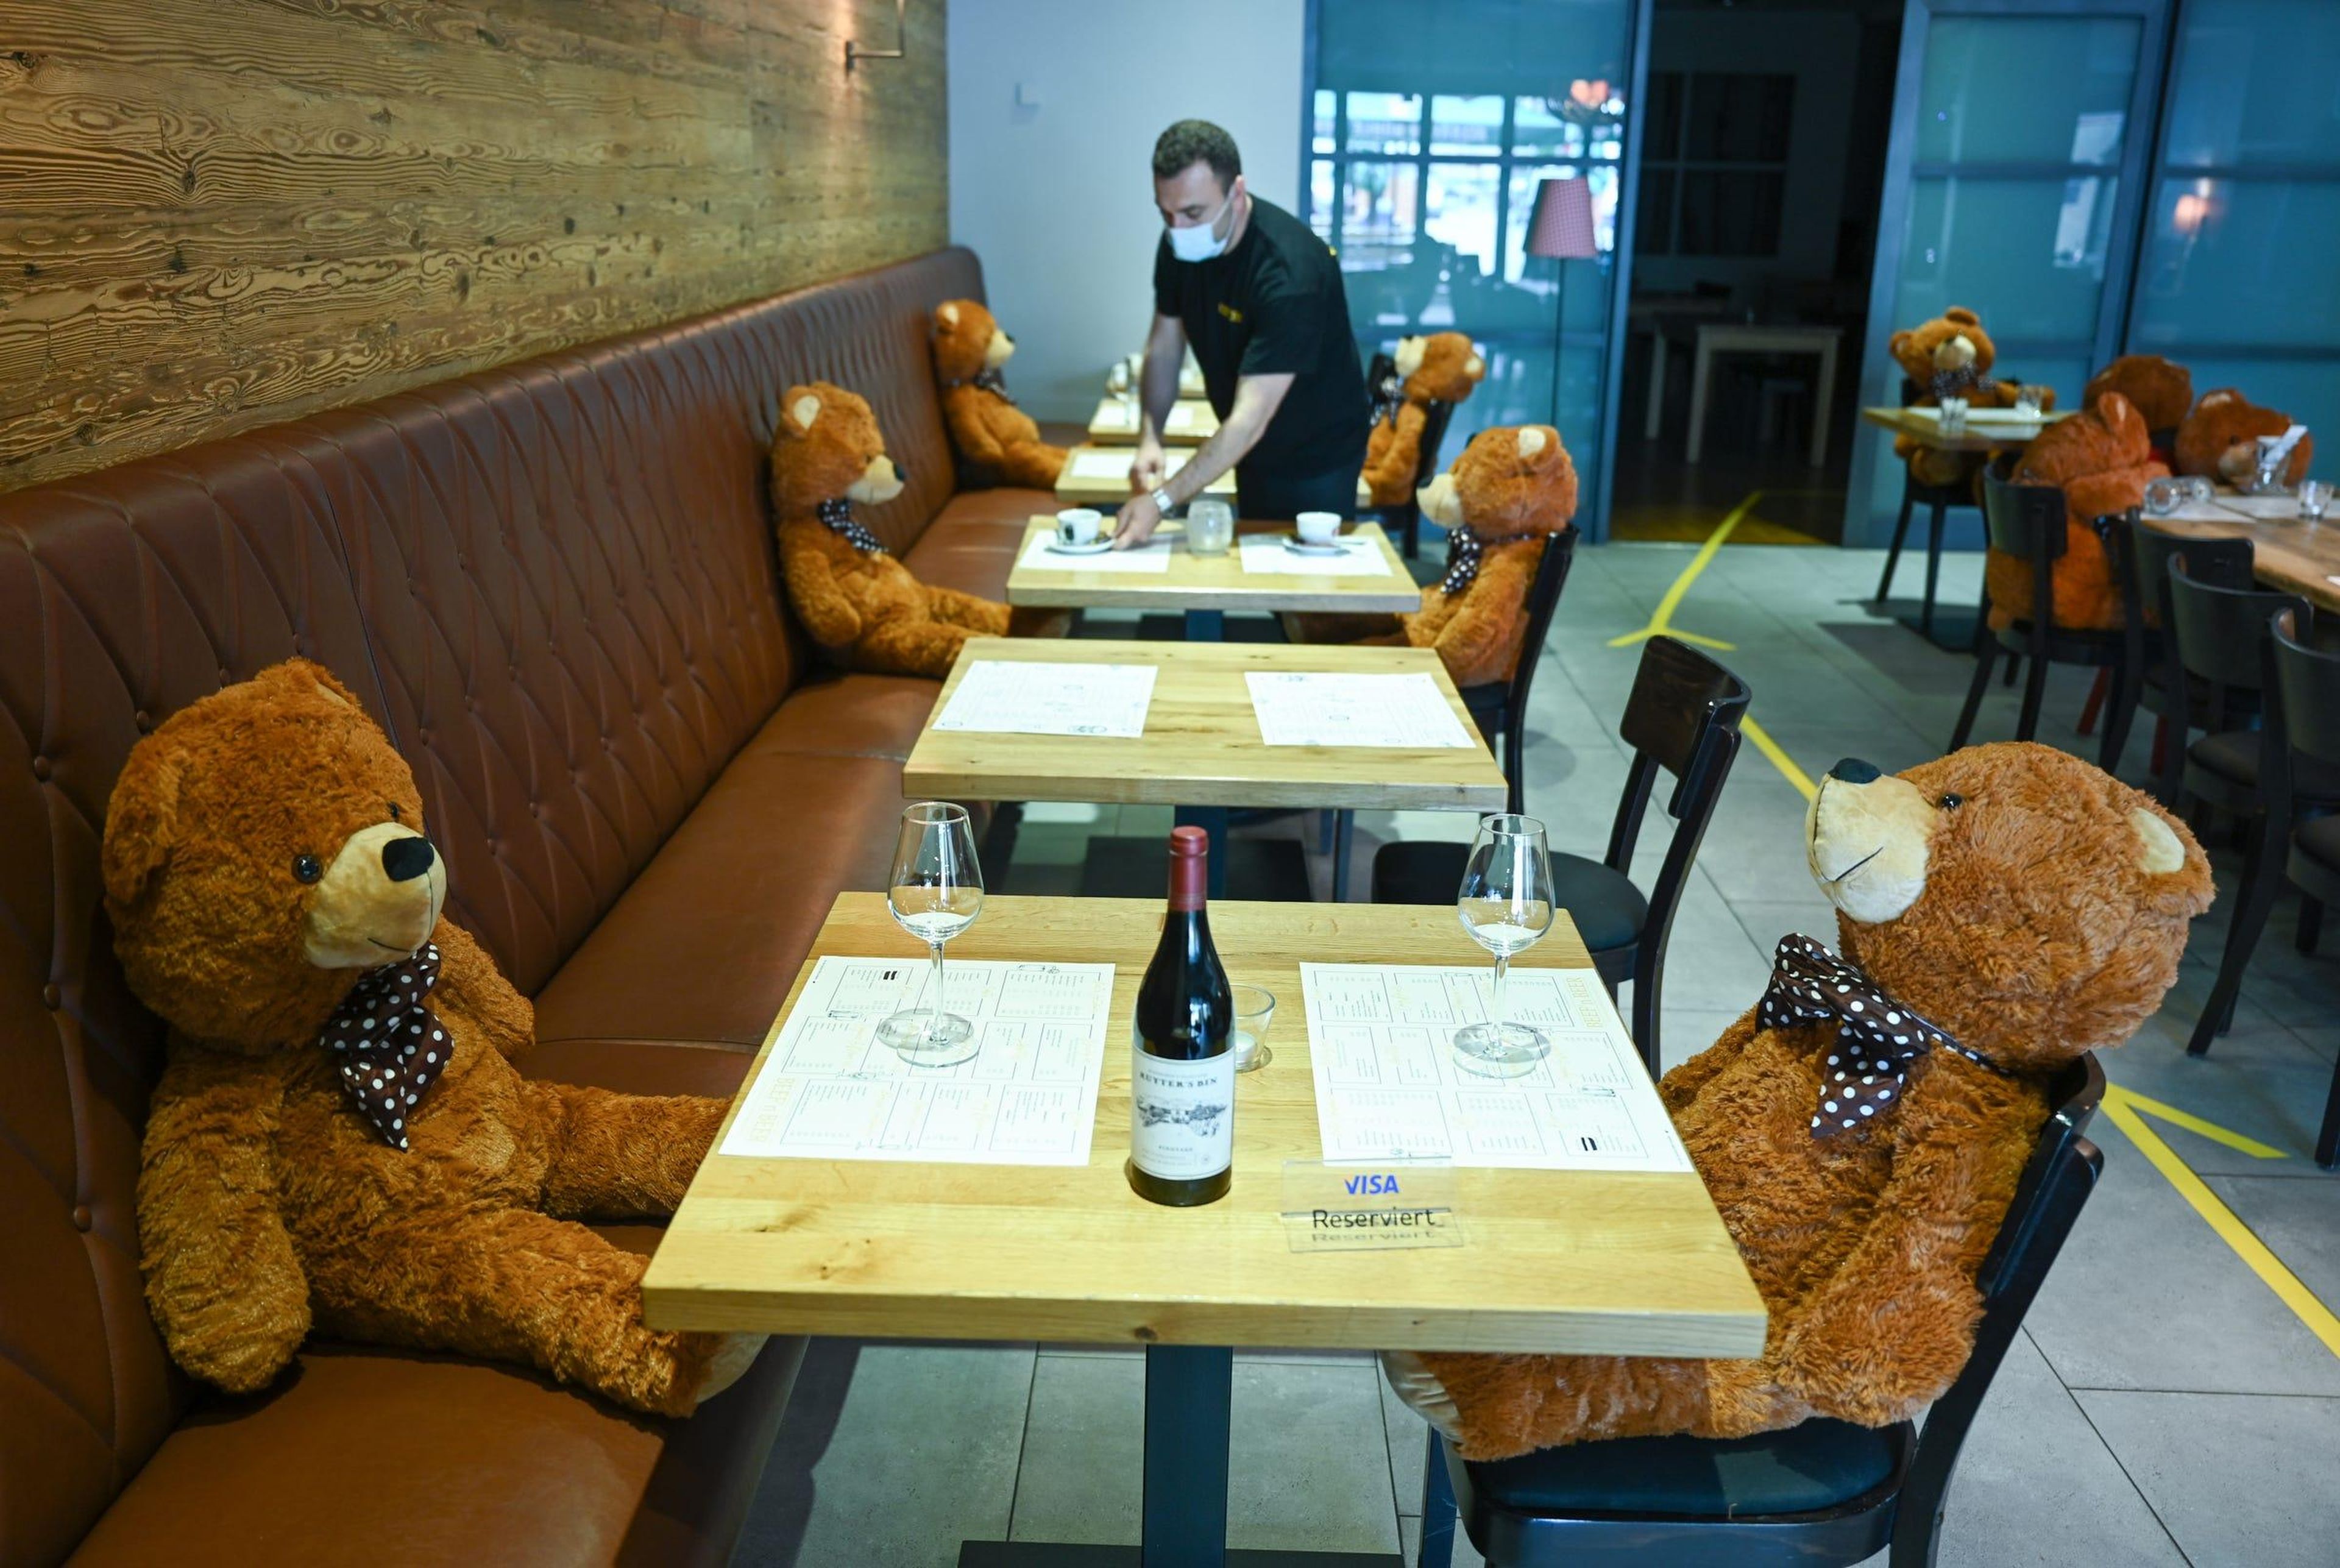 Teddy bears sit at tables at the restaurant "Beef'n Beer" in Hofheim, Germany, on May 25, 2020.